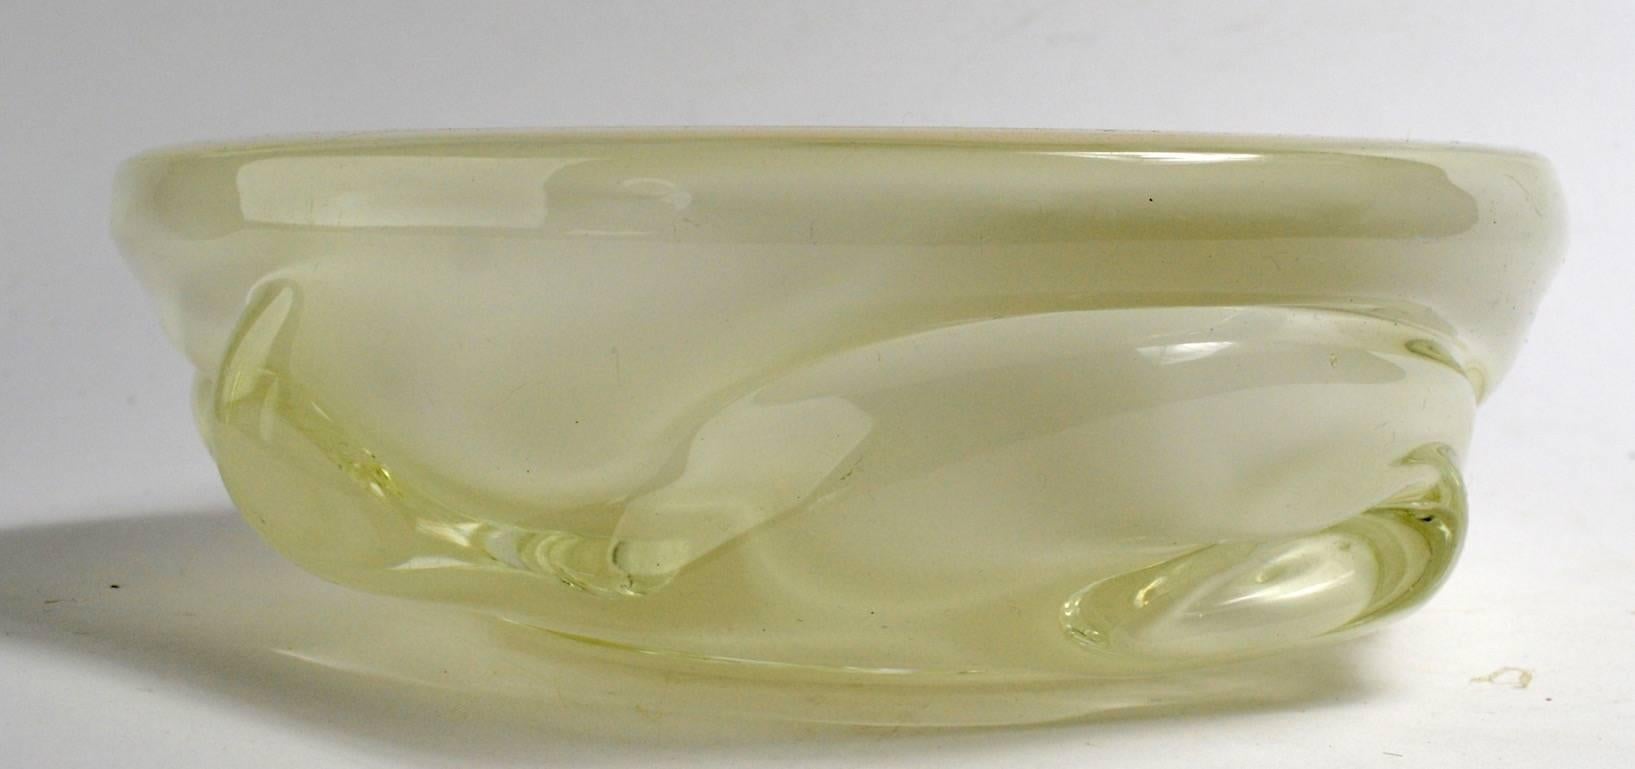 murano glass with gold flecks